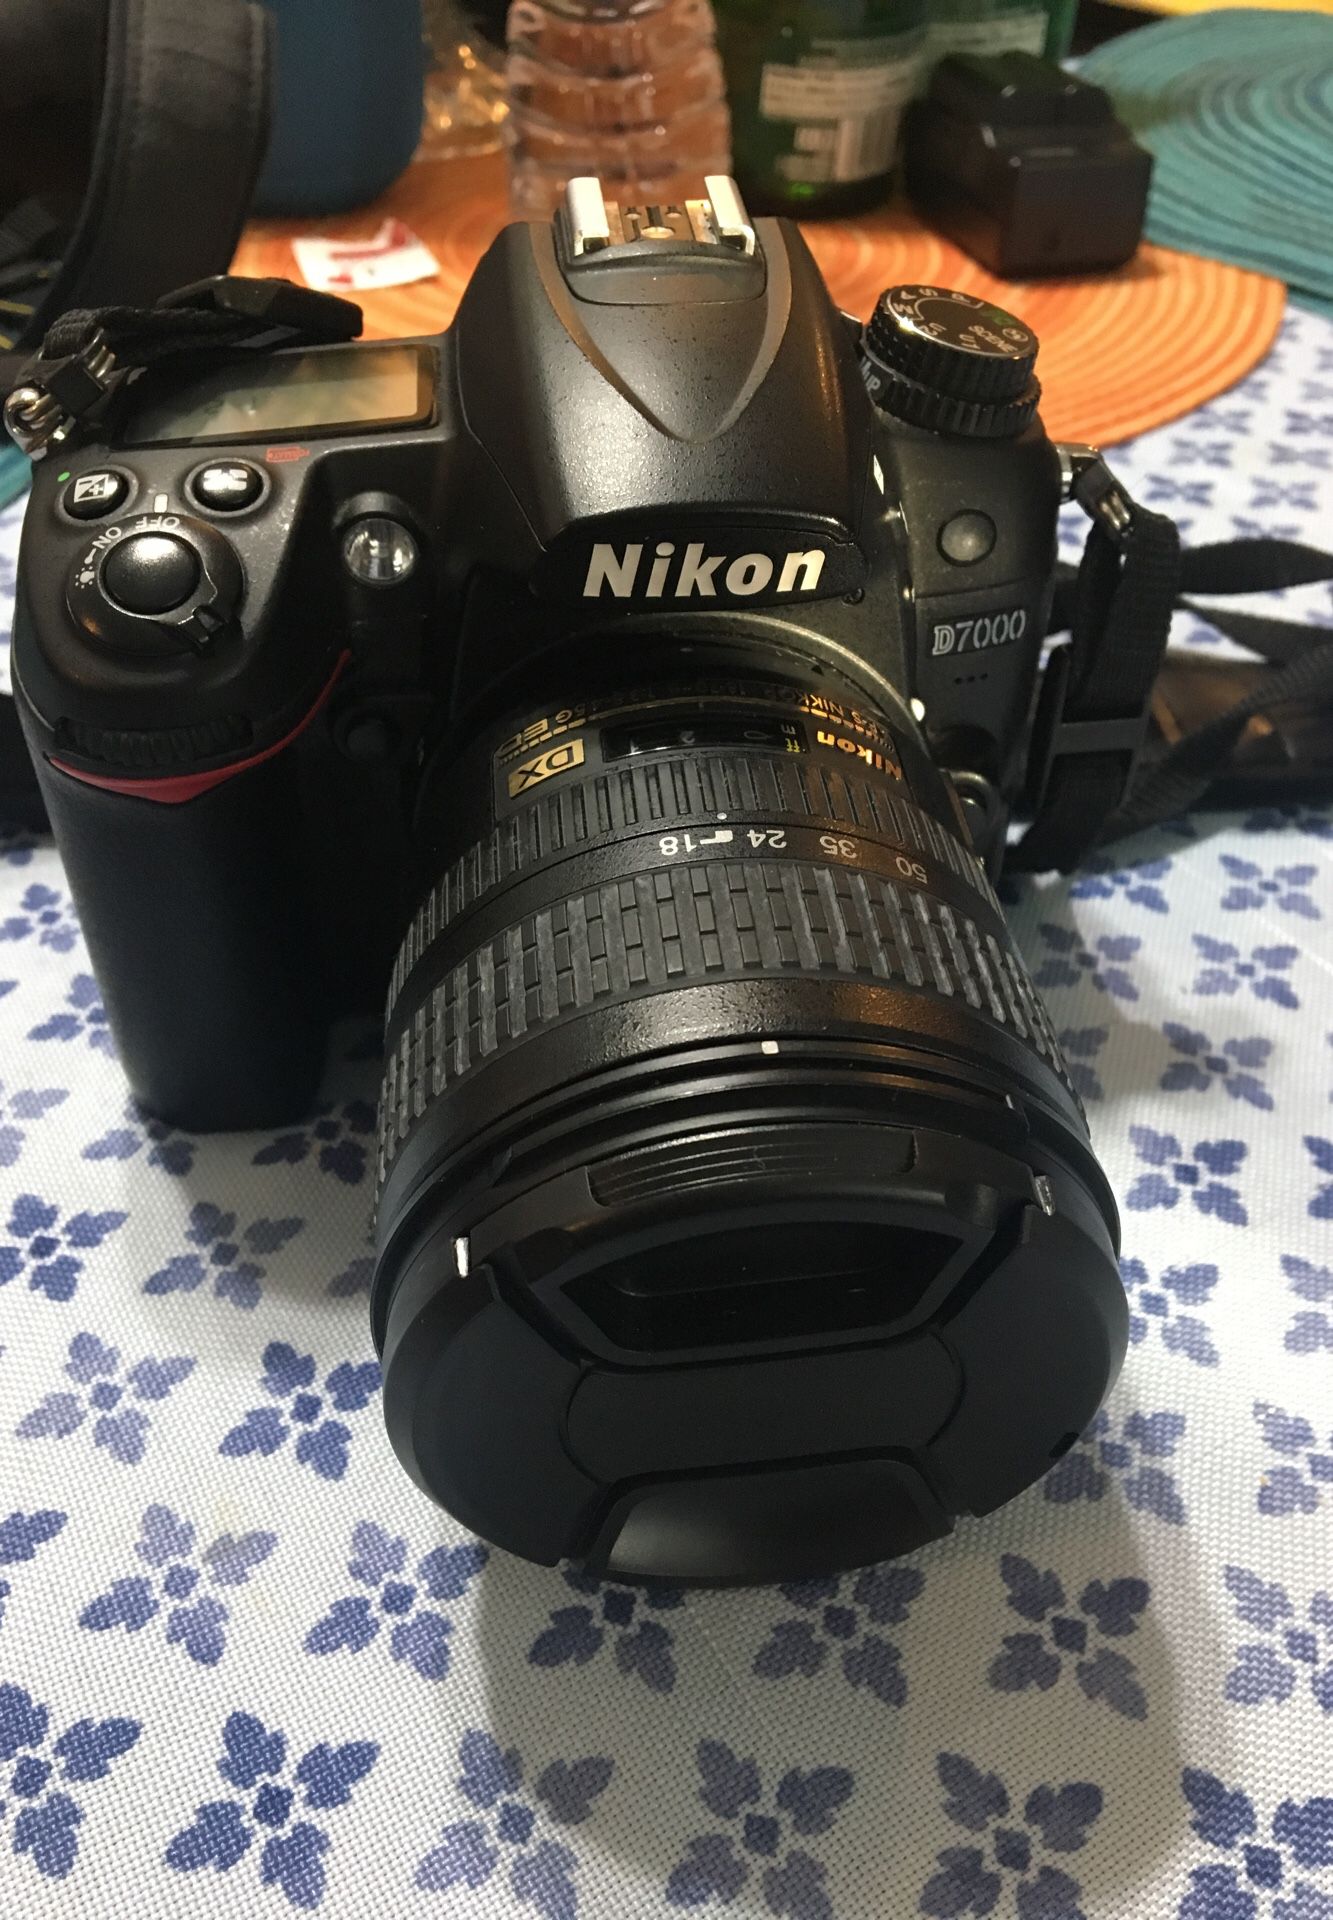 Nikon d7000 with 18-70 lens